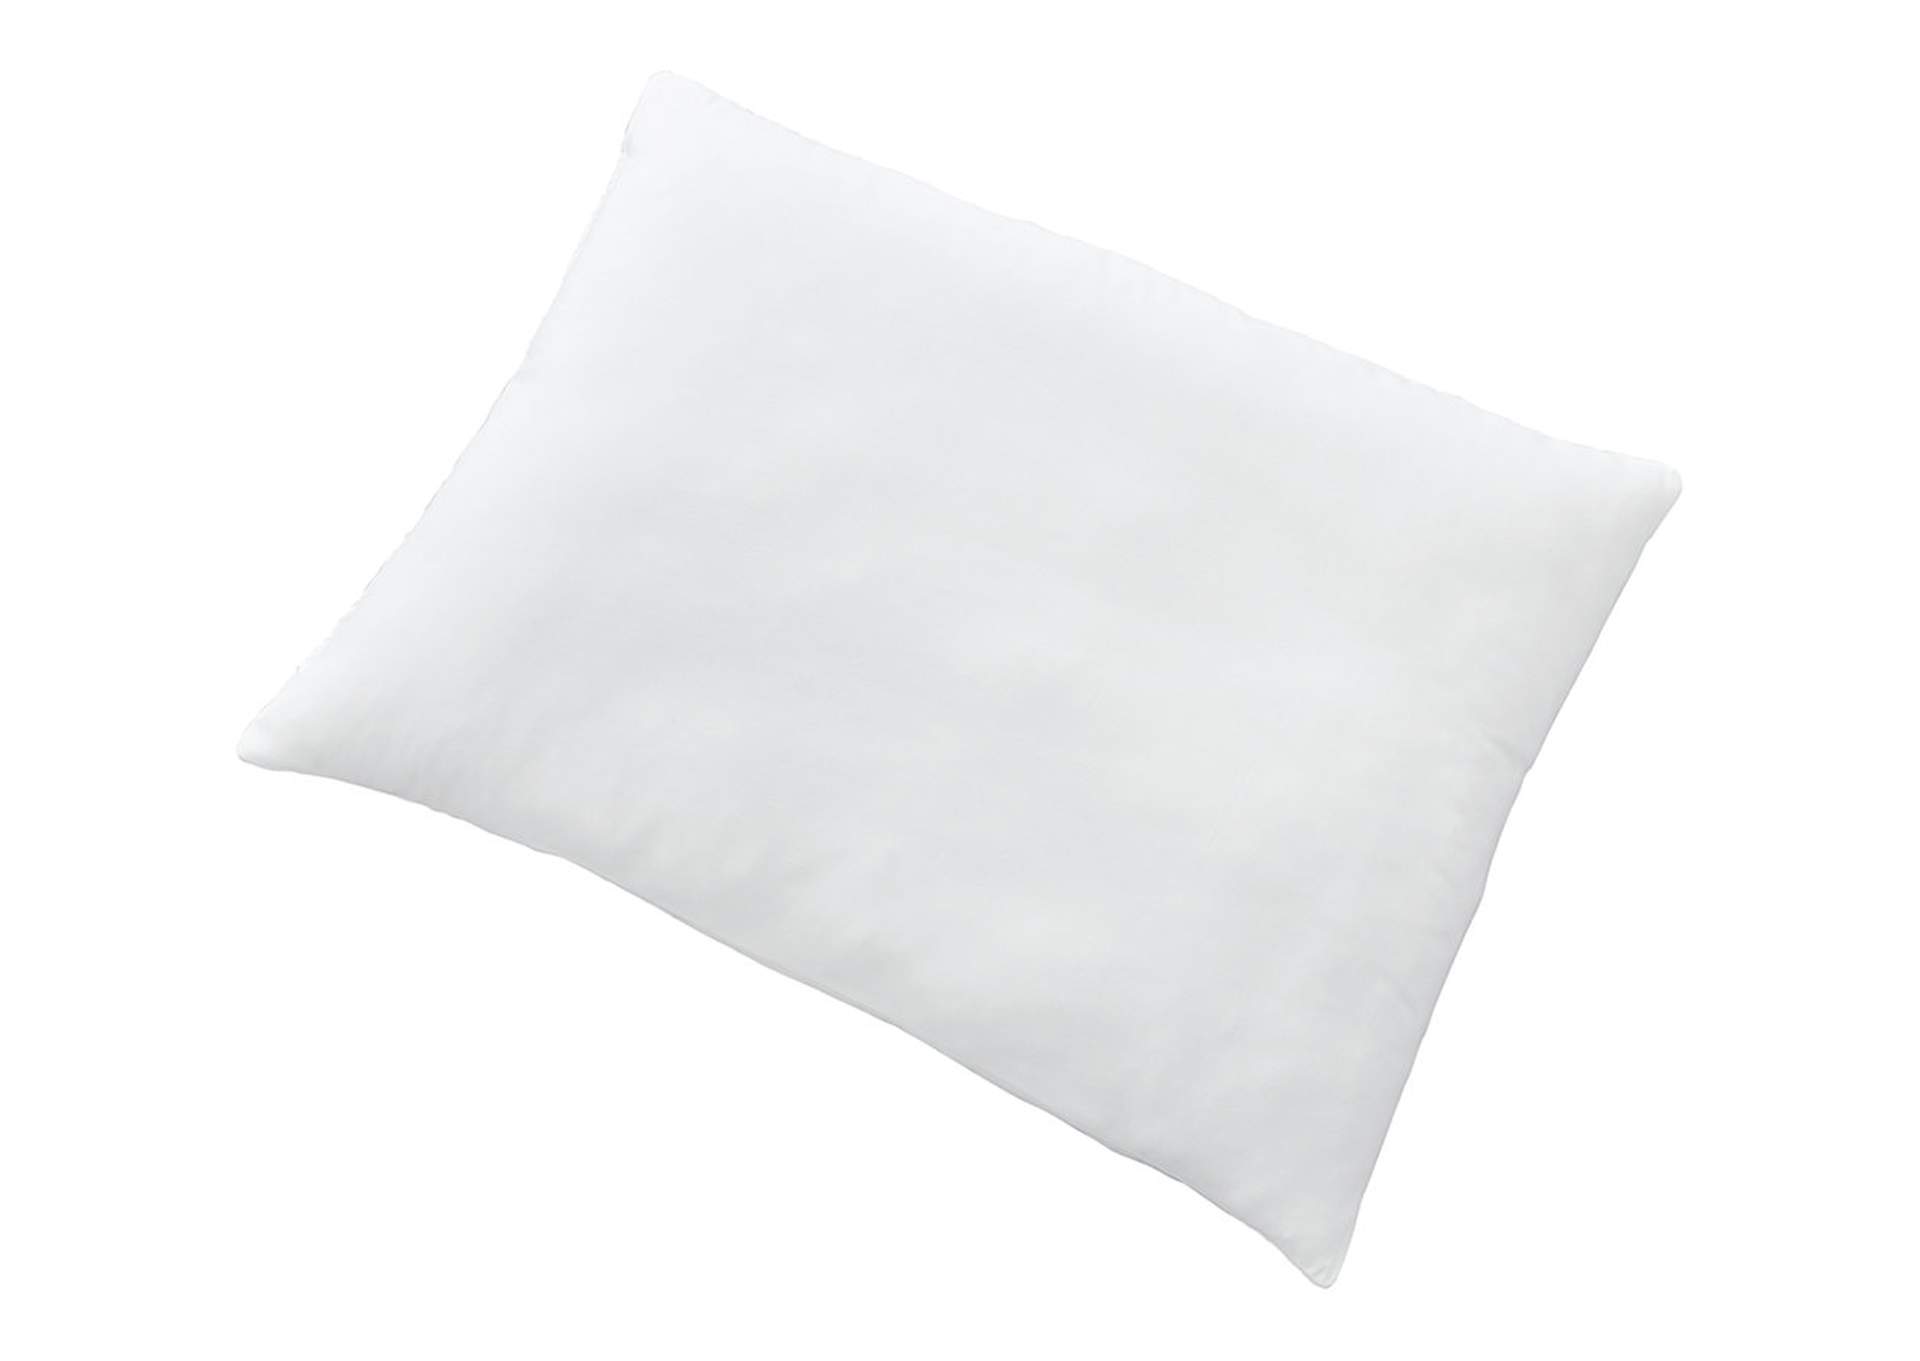 Z123 Pillow Series Soft Microfiber Pillow,Direct To Consumer Express